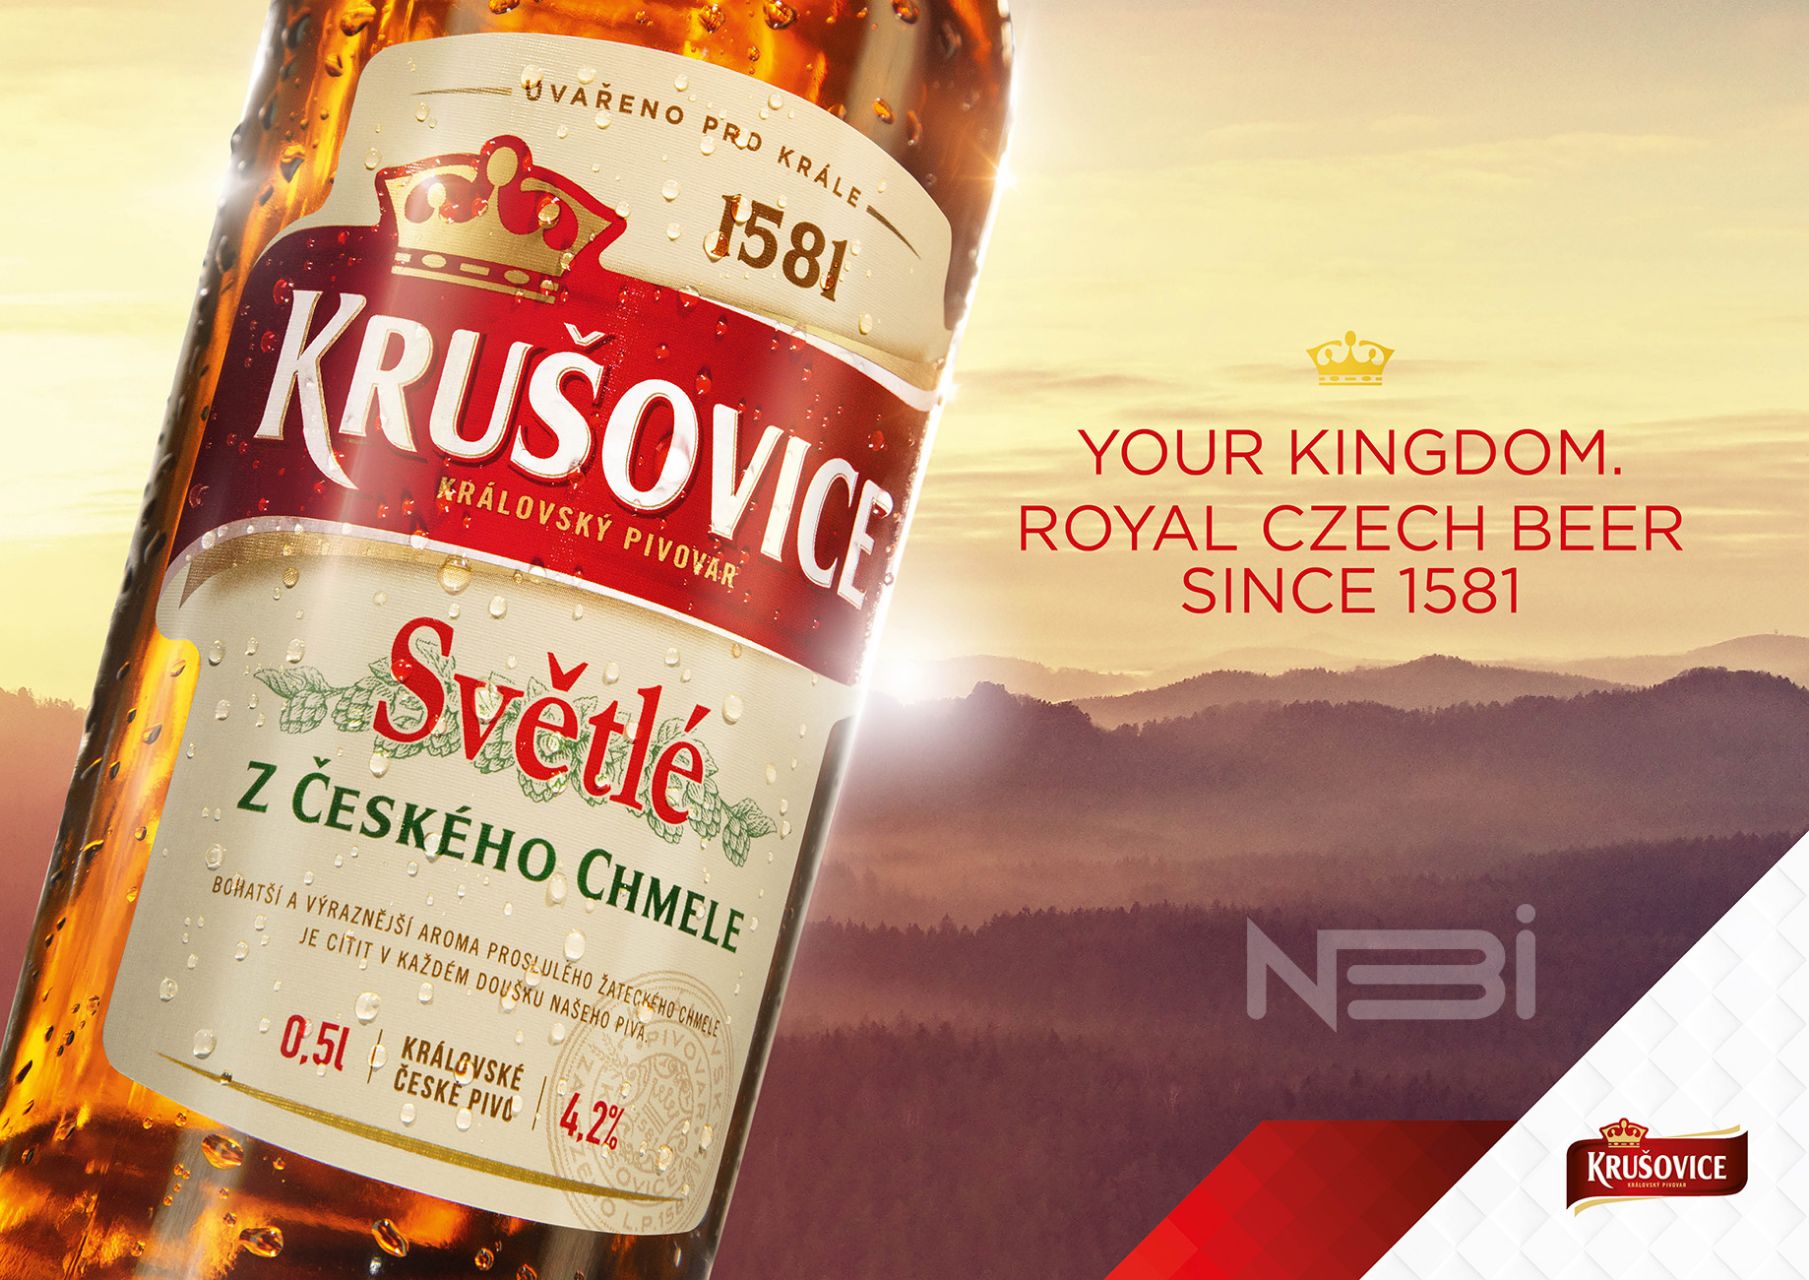 Фотосъемка стеклянной бутылки Krusovice фотостудия нби